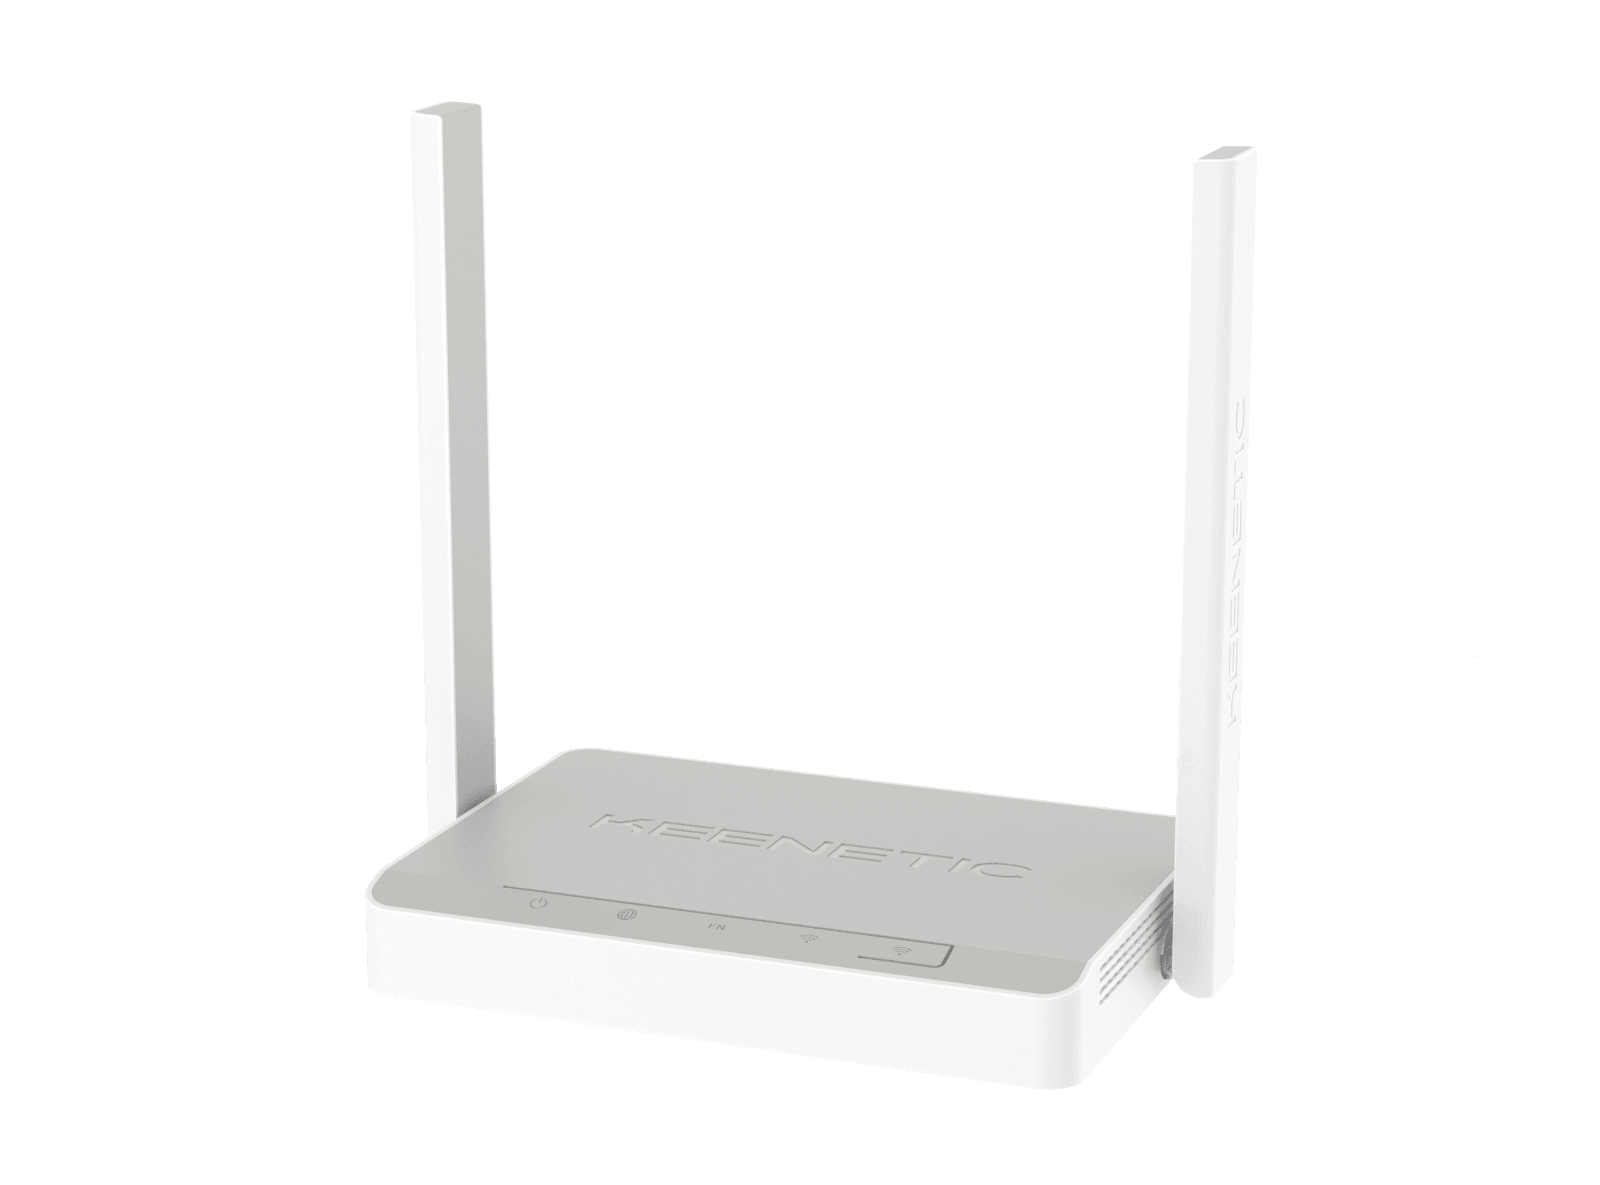 Беспроводной маршрутизатор KEENETIC "EXTRA" KN-1713 WiFi 867+300Мбит/сек. + 3 порта LAN 100Мбит/сек. + 1 порт WAN 100Мбит/сек. + 1 порт USB2.0